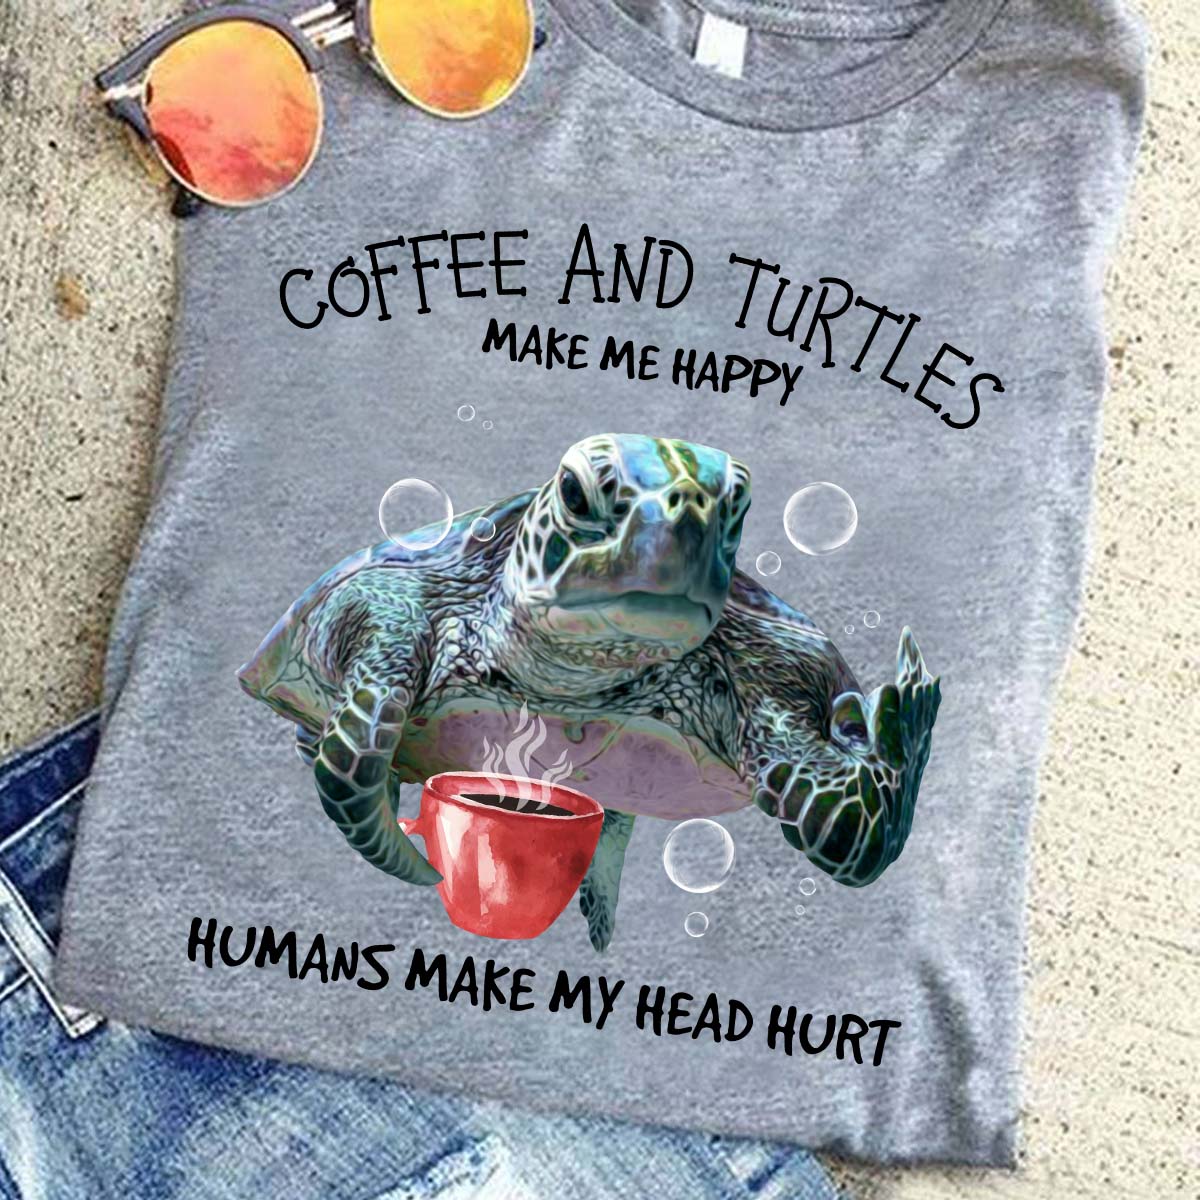 Coffee and turtles make me happy humans make my head hurt